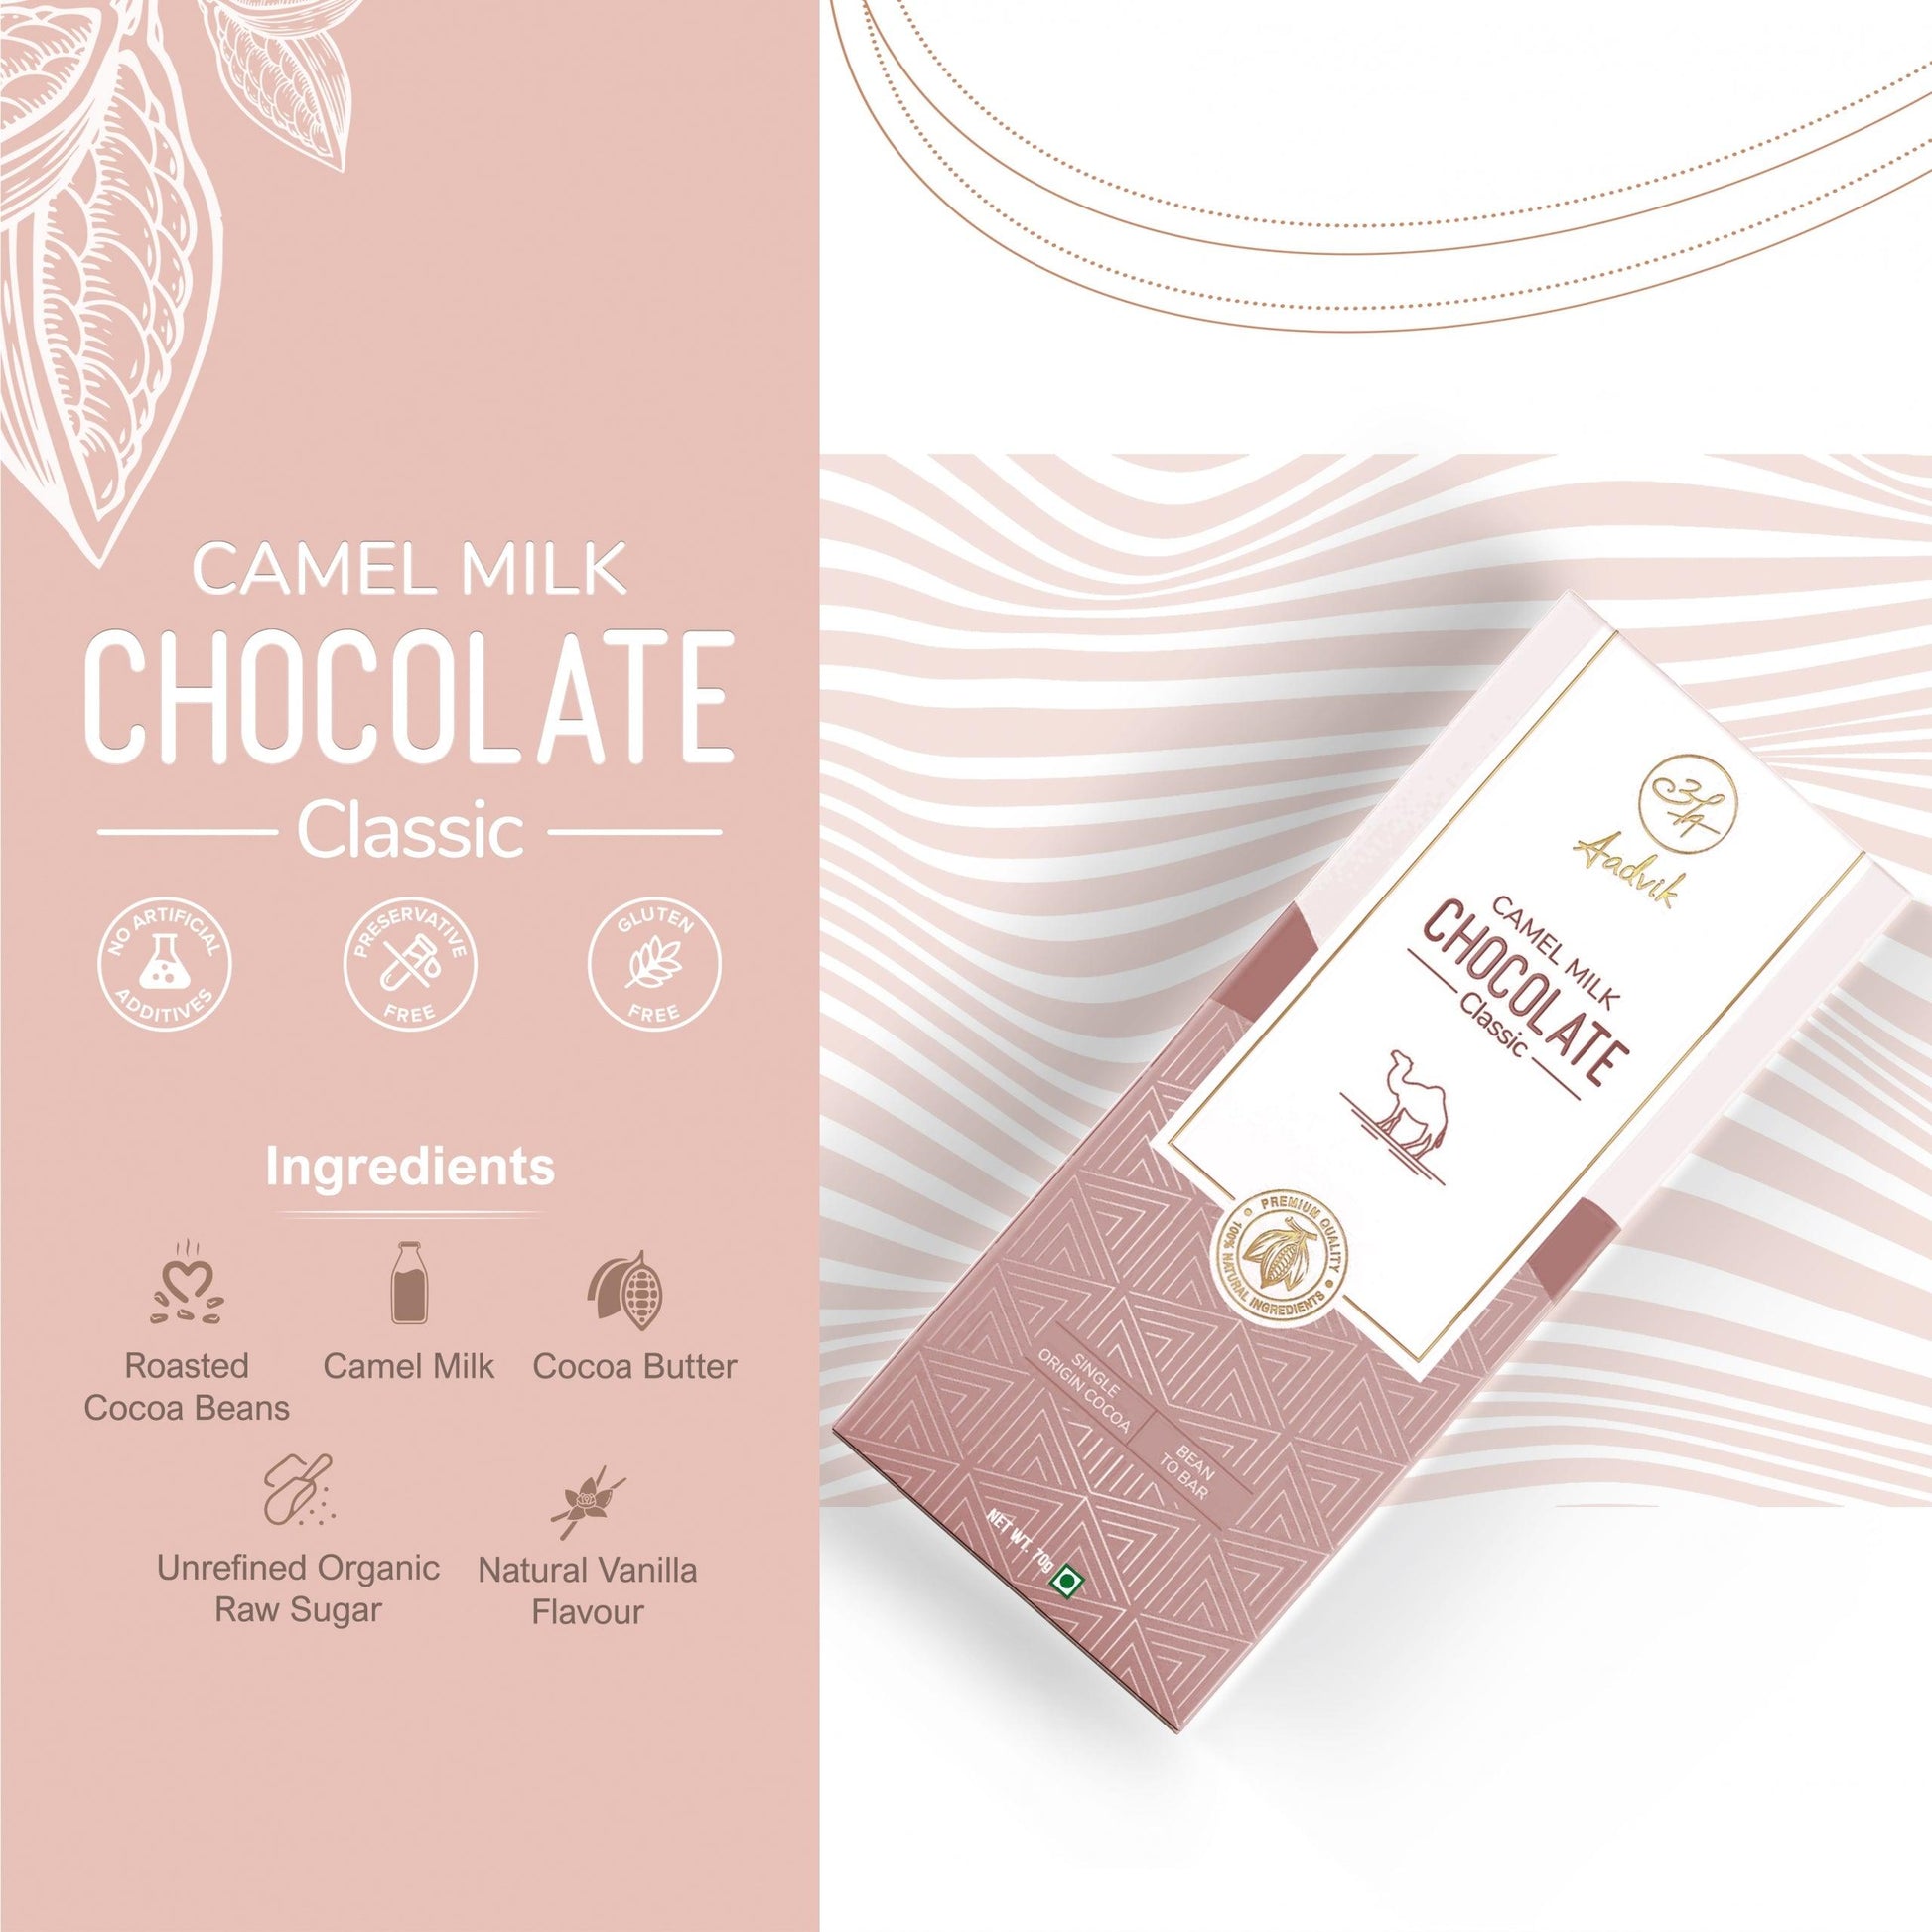 Camel Milk Chocolate । A Shark Tank Product | Classic । 70g - Aadvik Foods